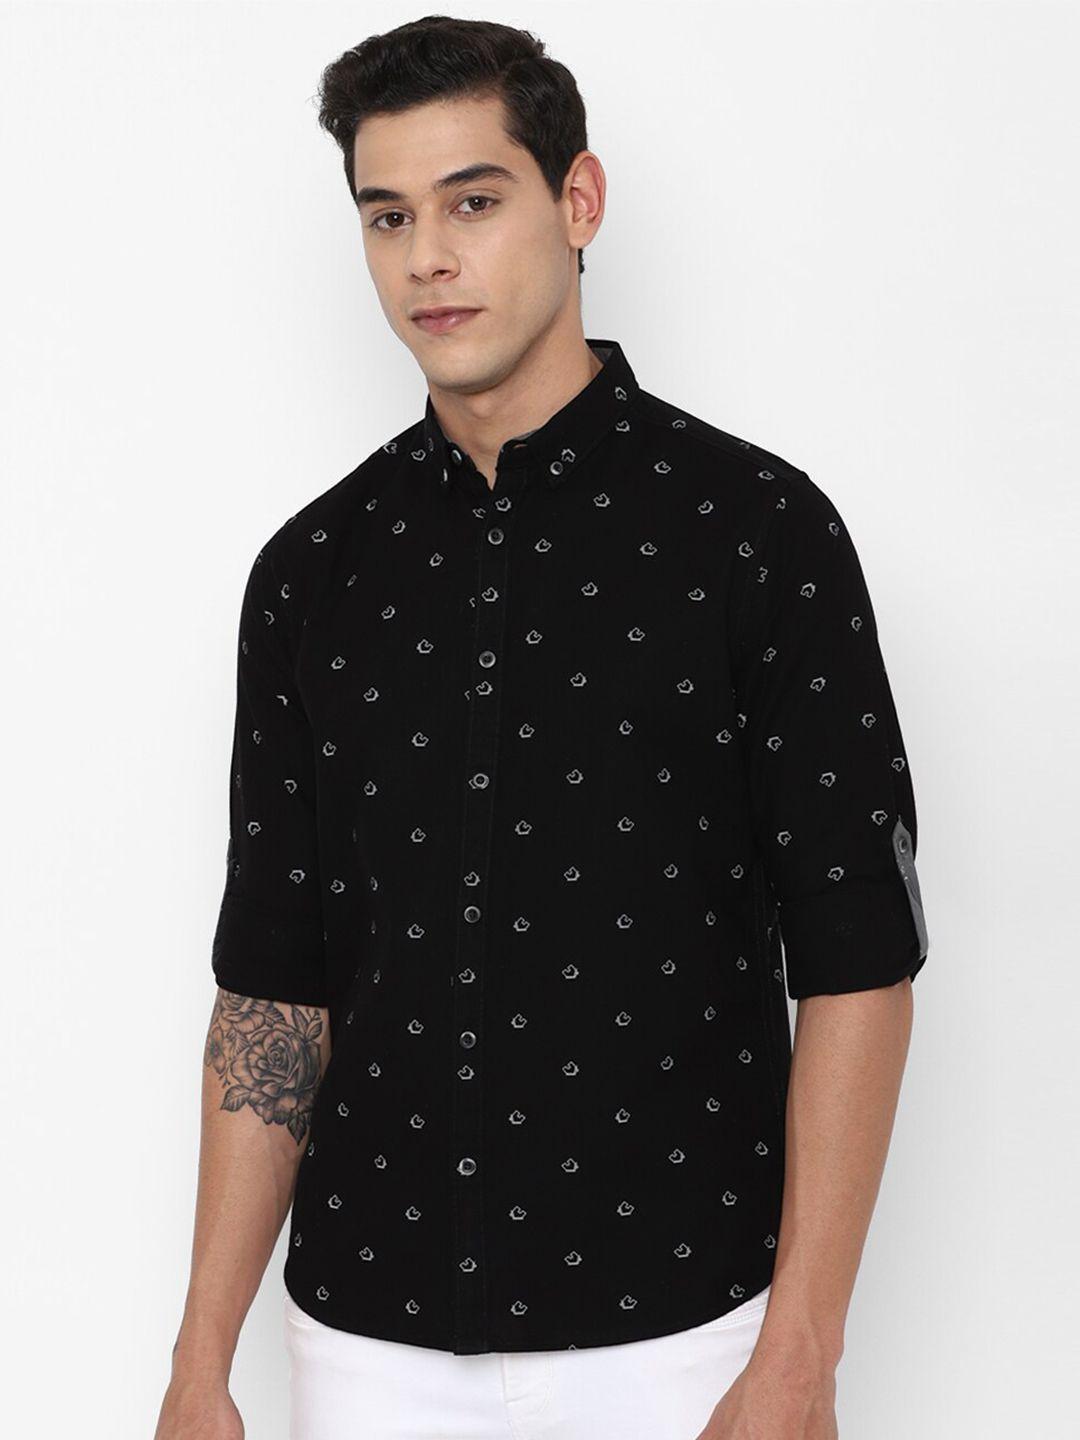 forever-21-men-black-regular-fit-printed-cotton-casual-shirt